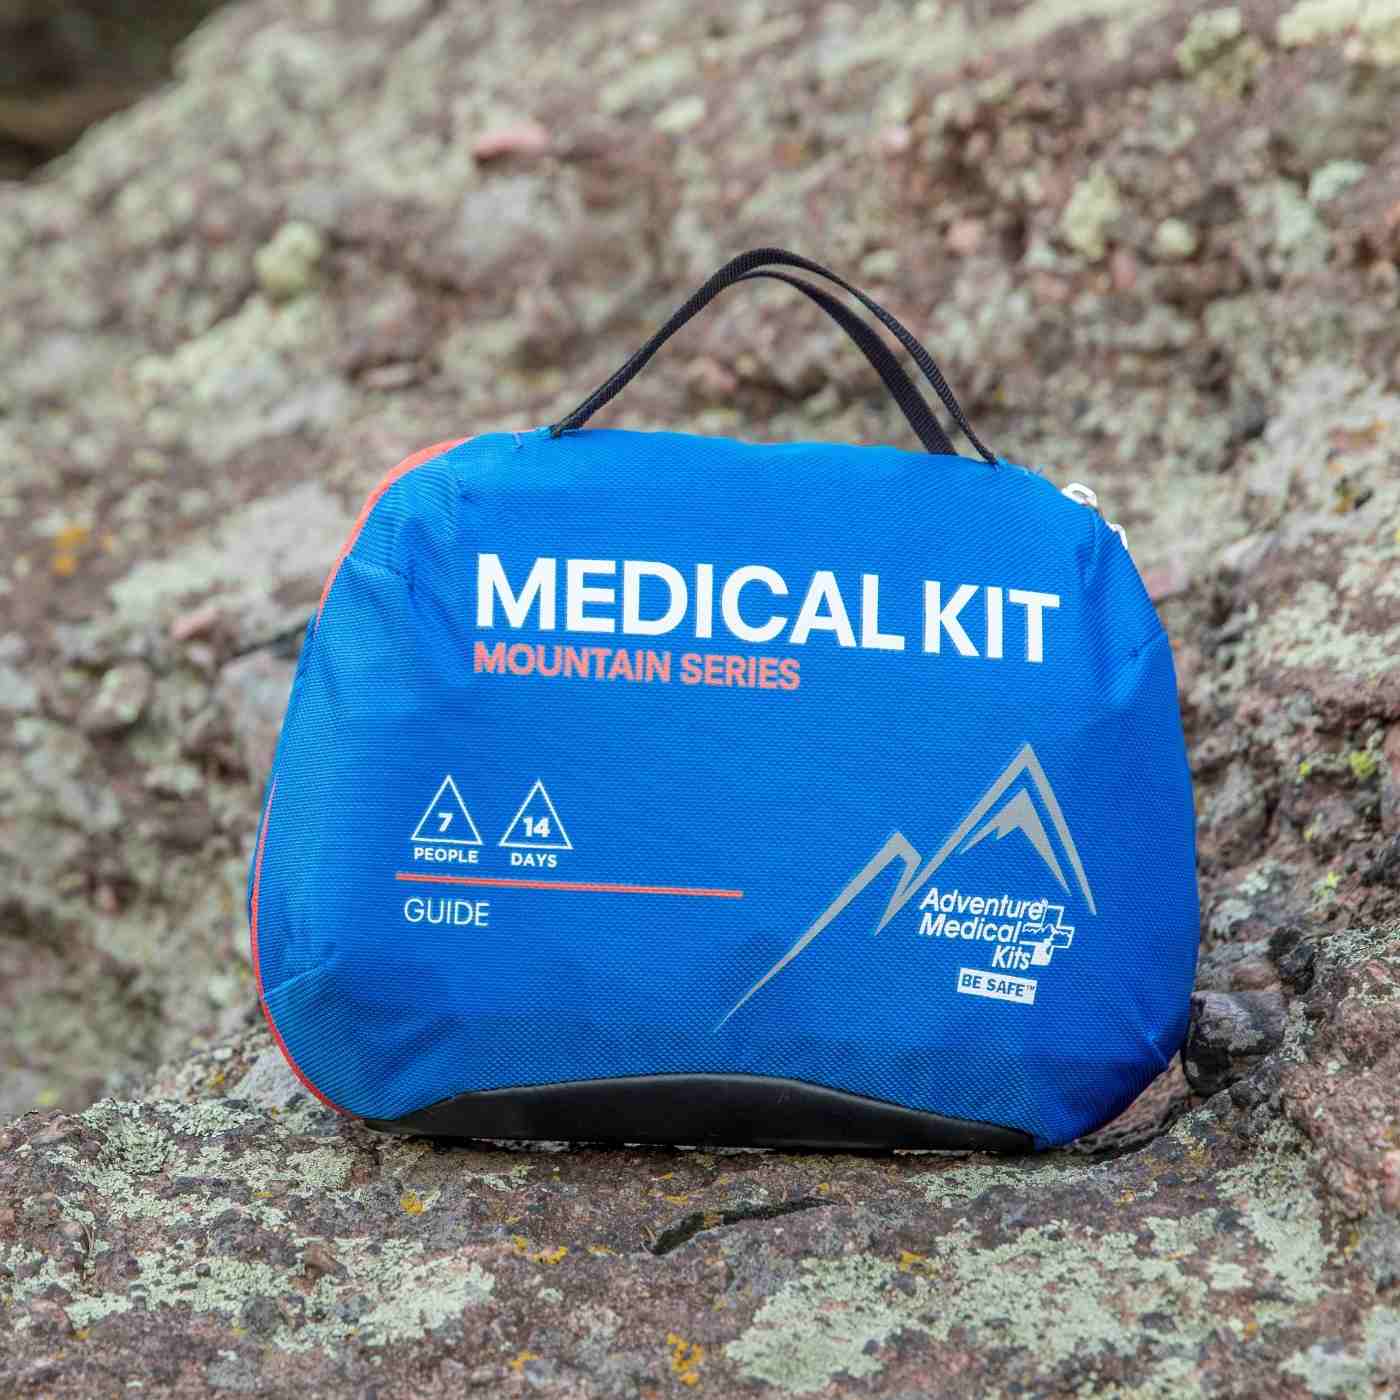 Mountain Series Medical Kit - Guide on rock